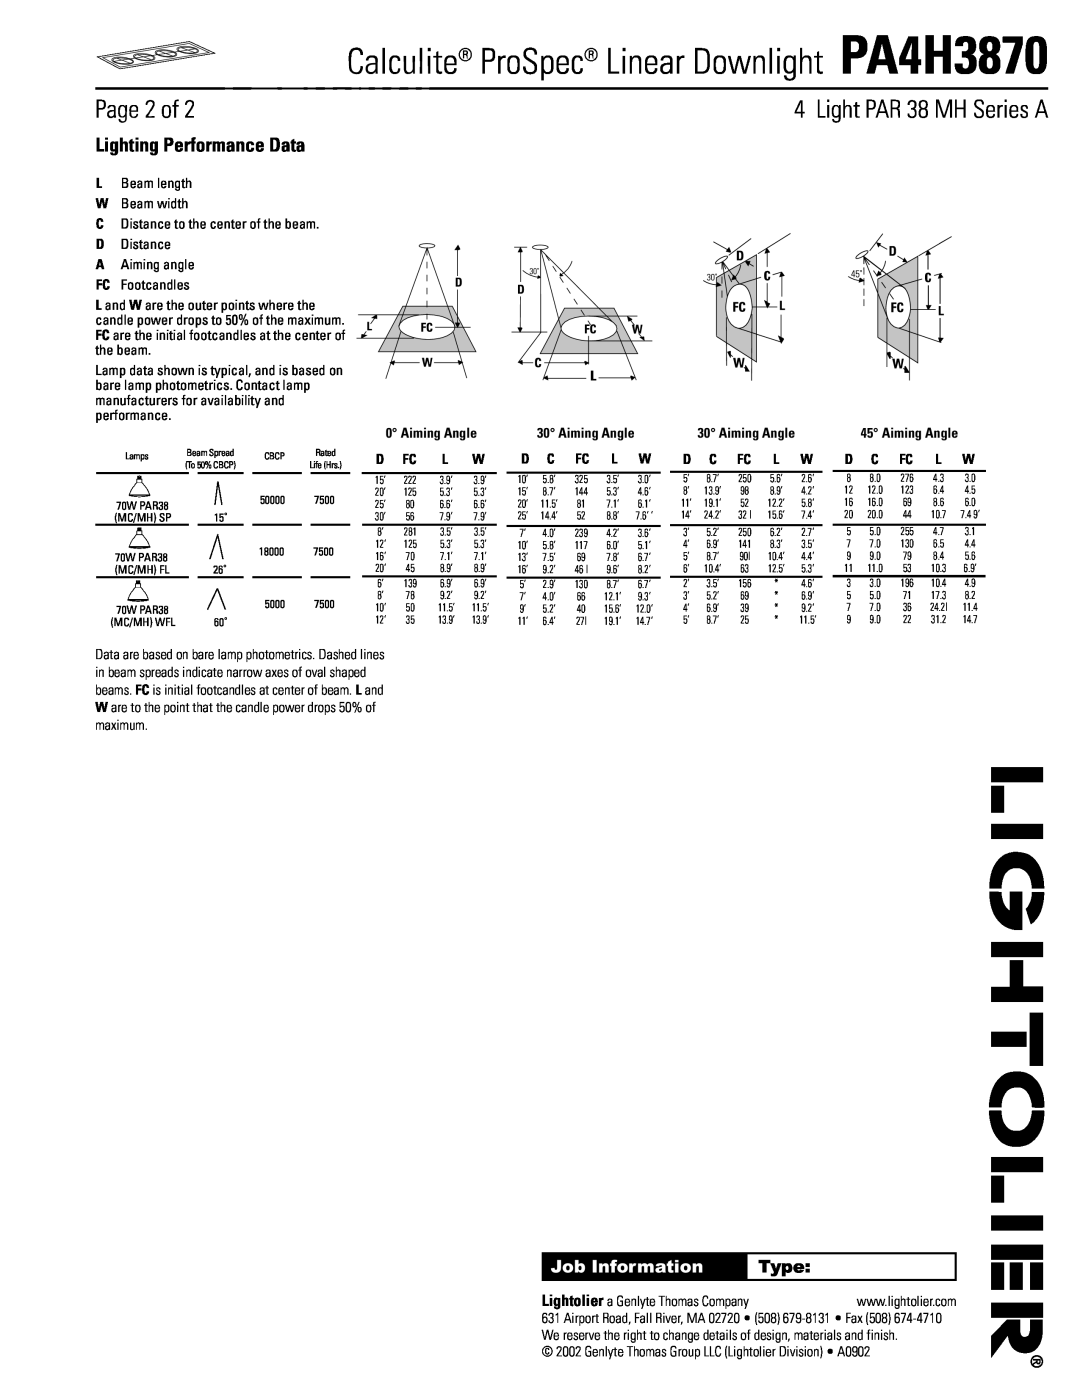 Lightolier PA4H3870 Light PAR 38 MH Series A, Page 2 of, Lighting Performance Data, Job Information, Type, 03/02, 50000 